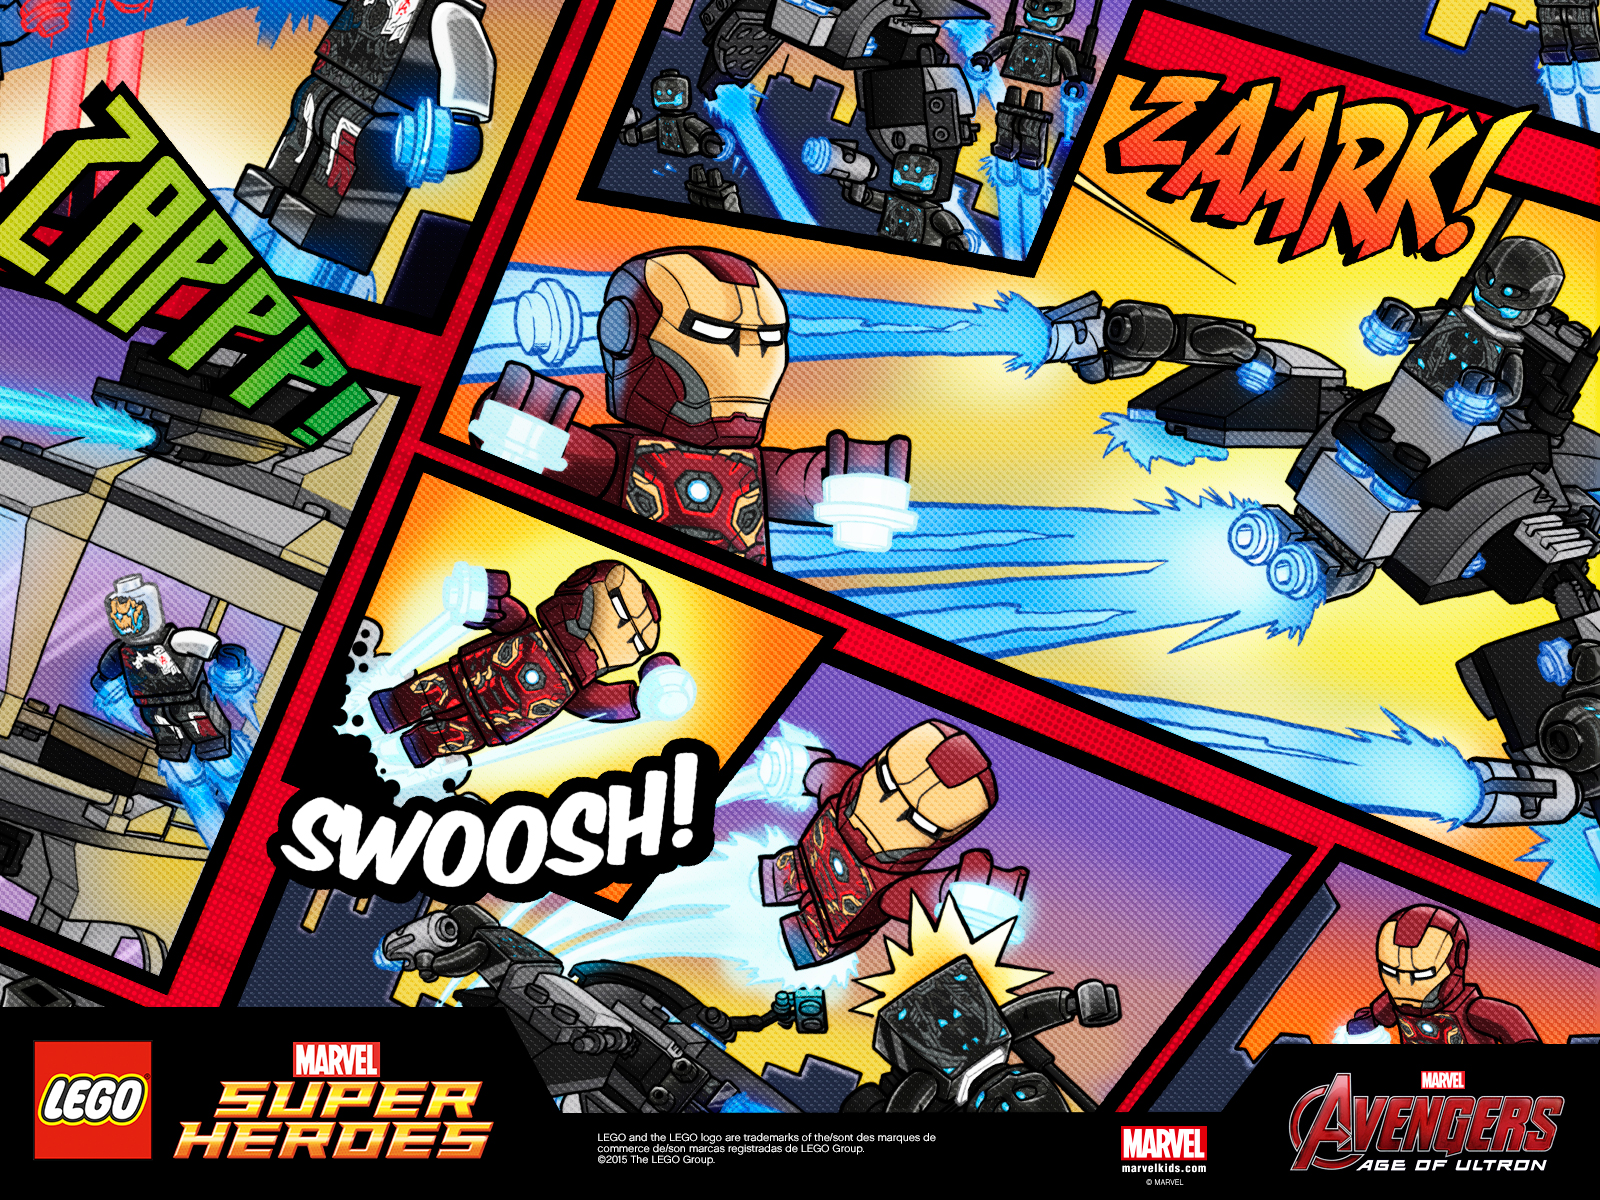 MARVEL Avengers Age of Ultron   Wallpapers   LEGO Marvel Super